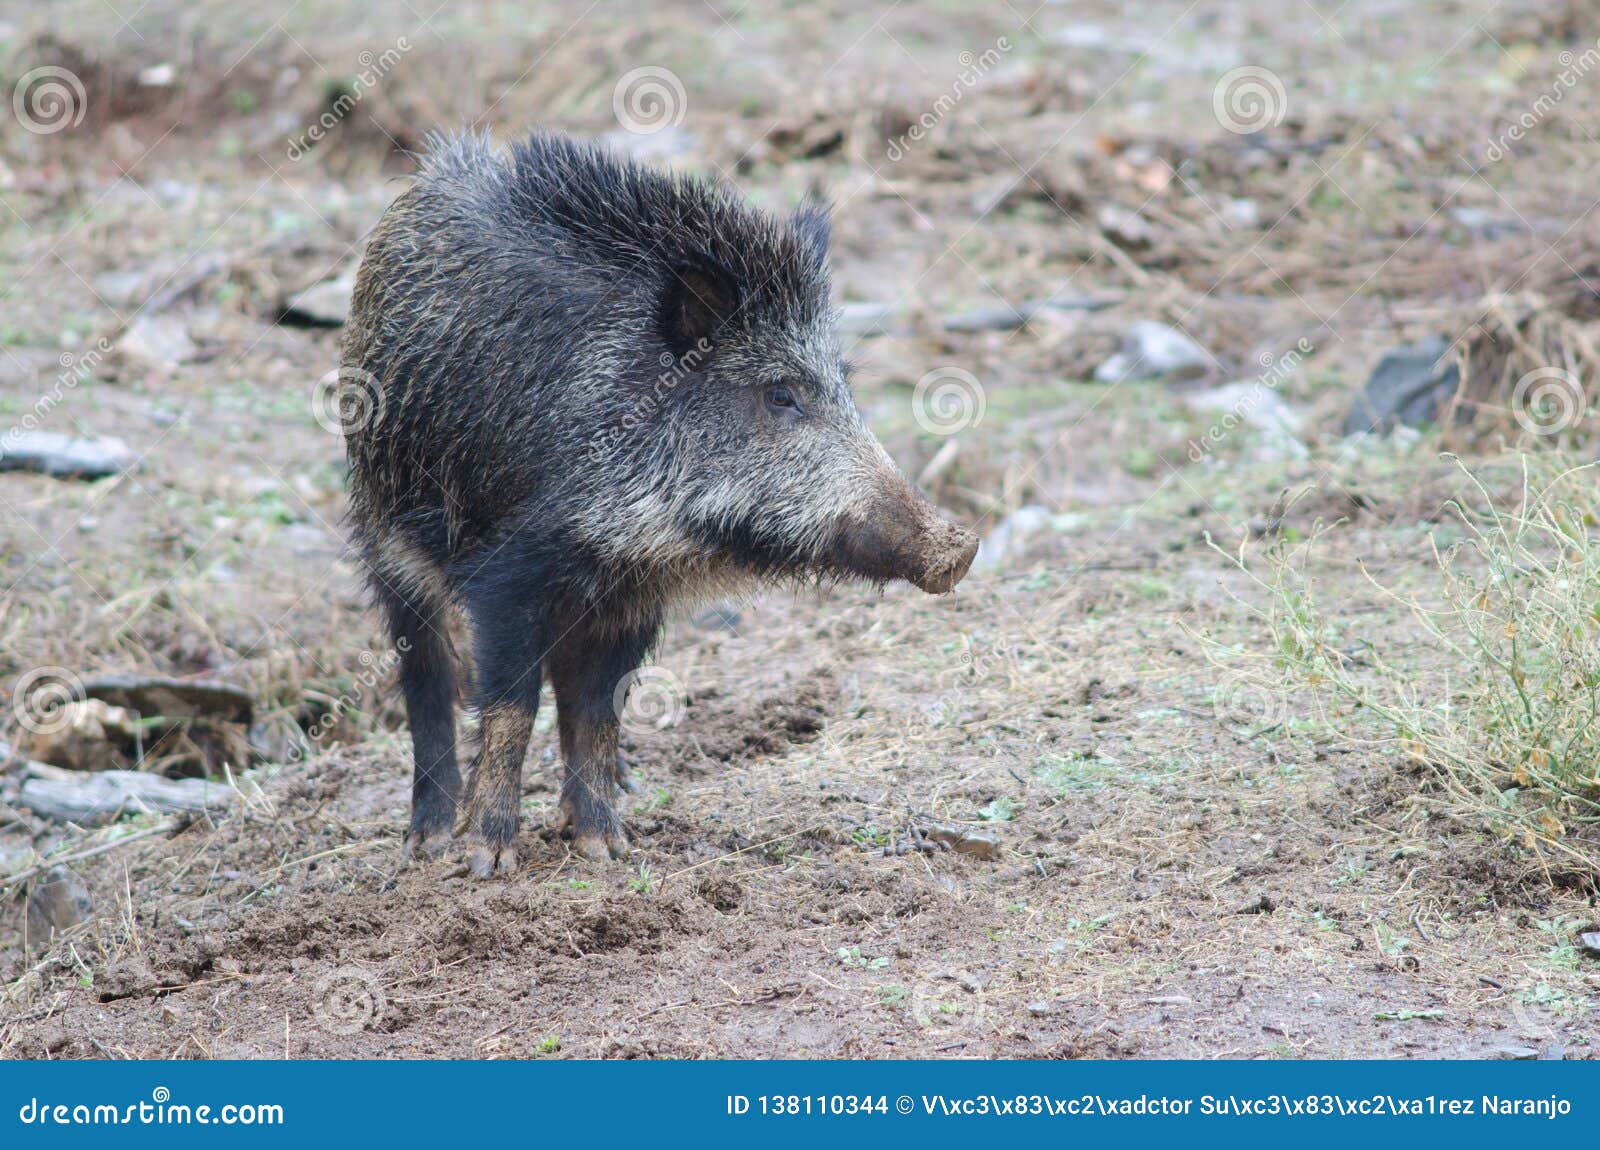 wild boar sus scrofa in the huerto del almez.